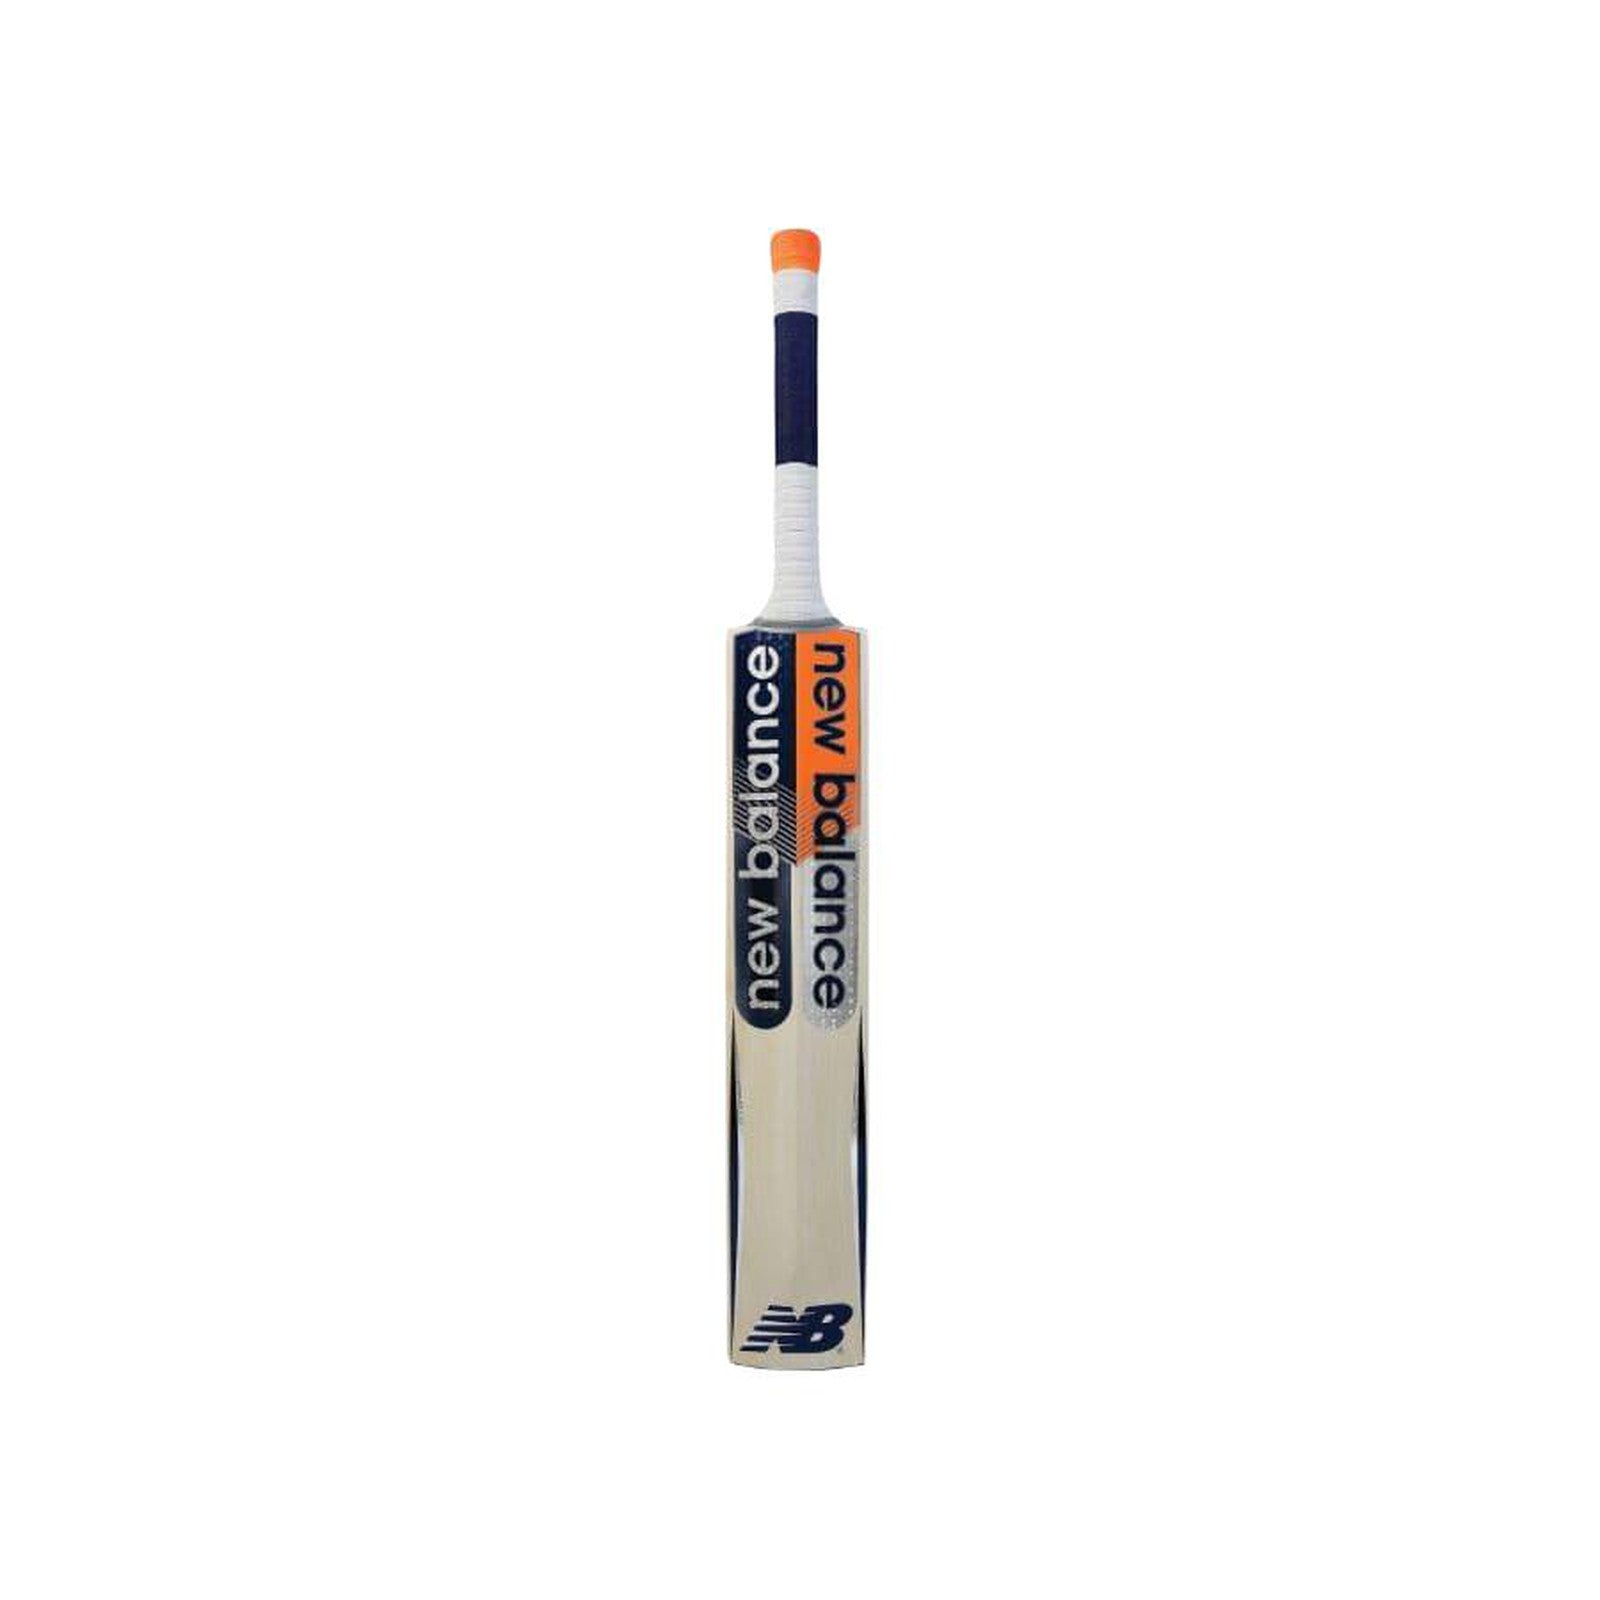 New Balance NB DC 590 Cricket Bat - Size 6